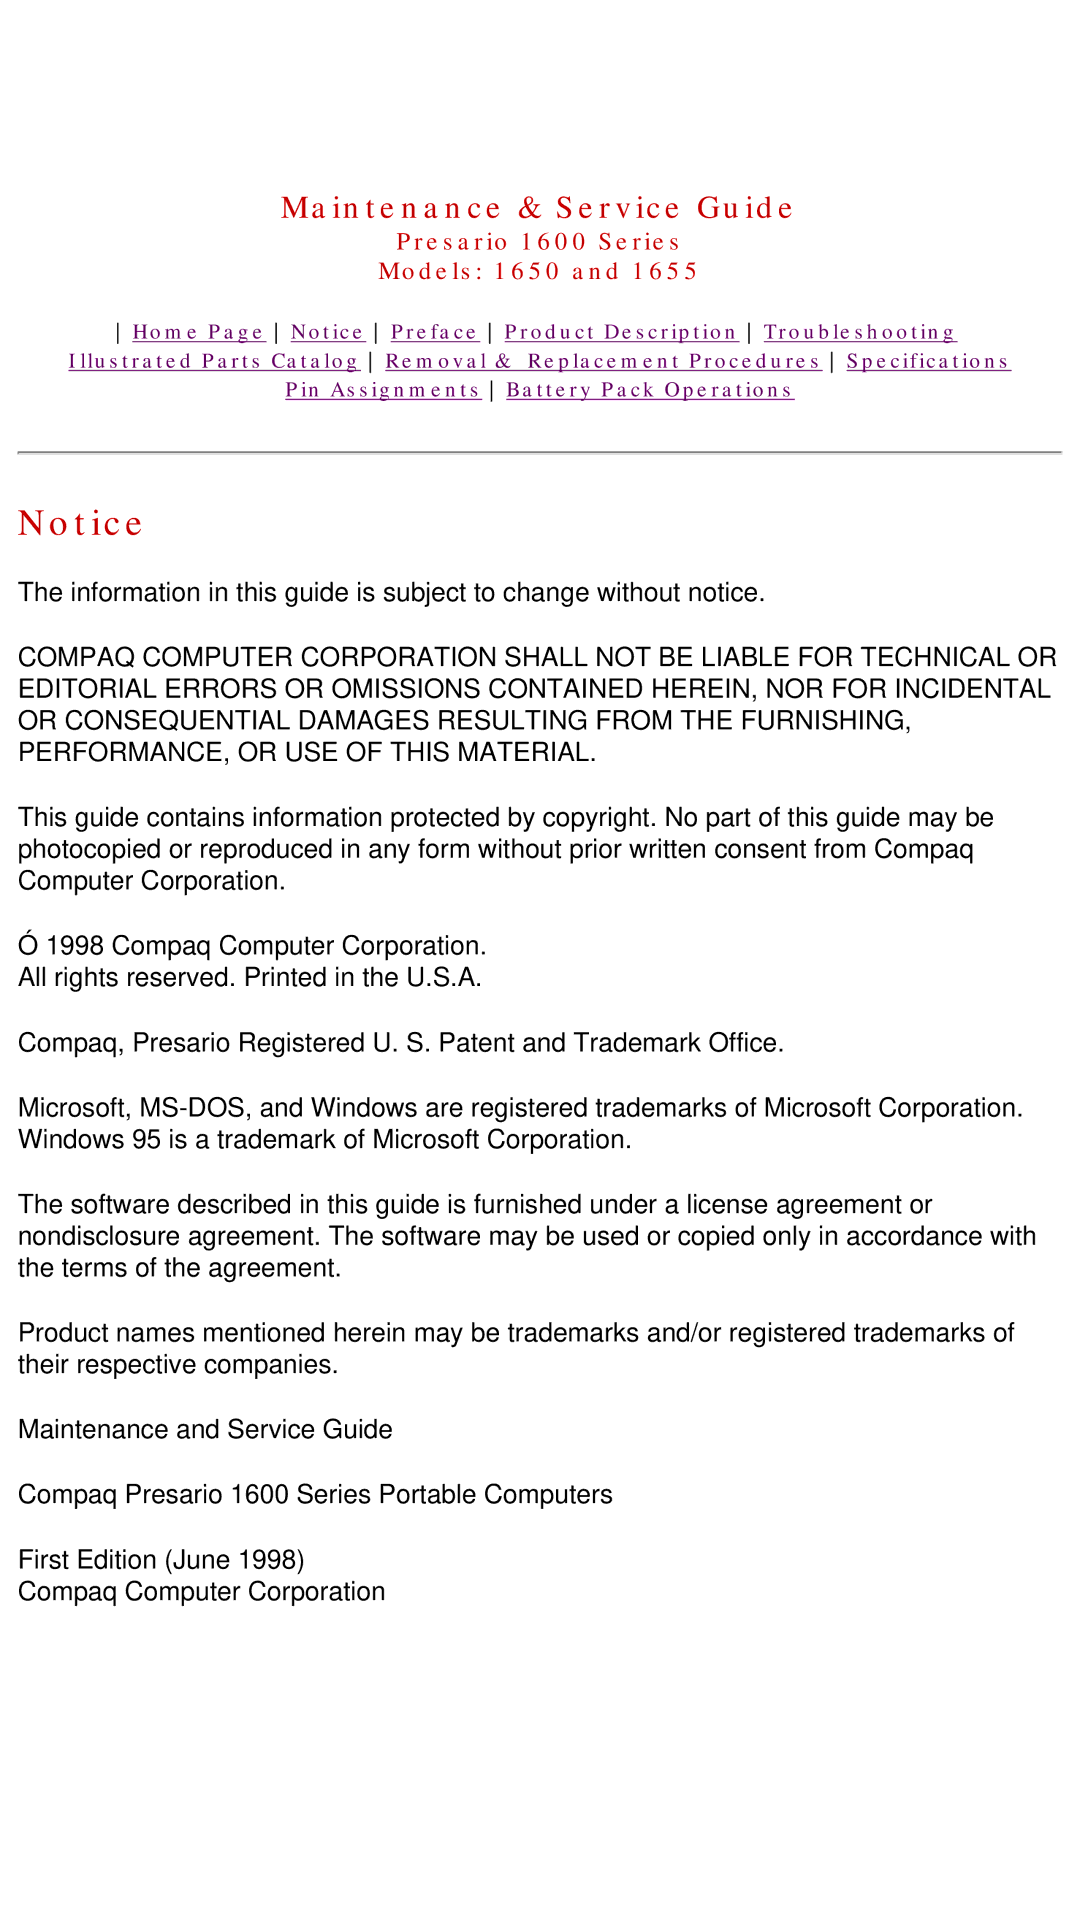 Compaq 1655, Presario 1600 Series, 1650 manual Maintenance & Service Guide 